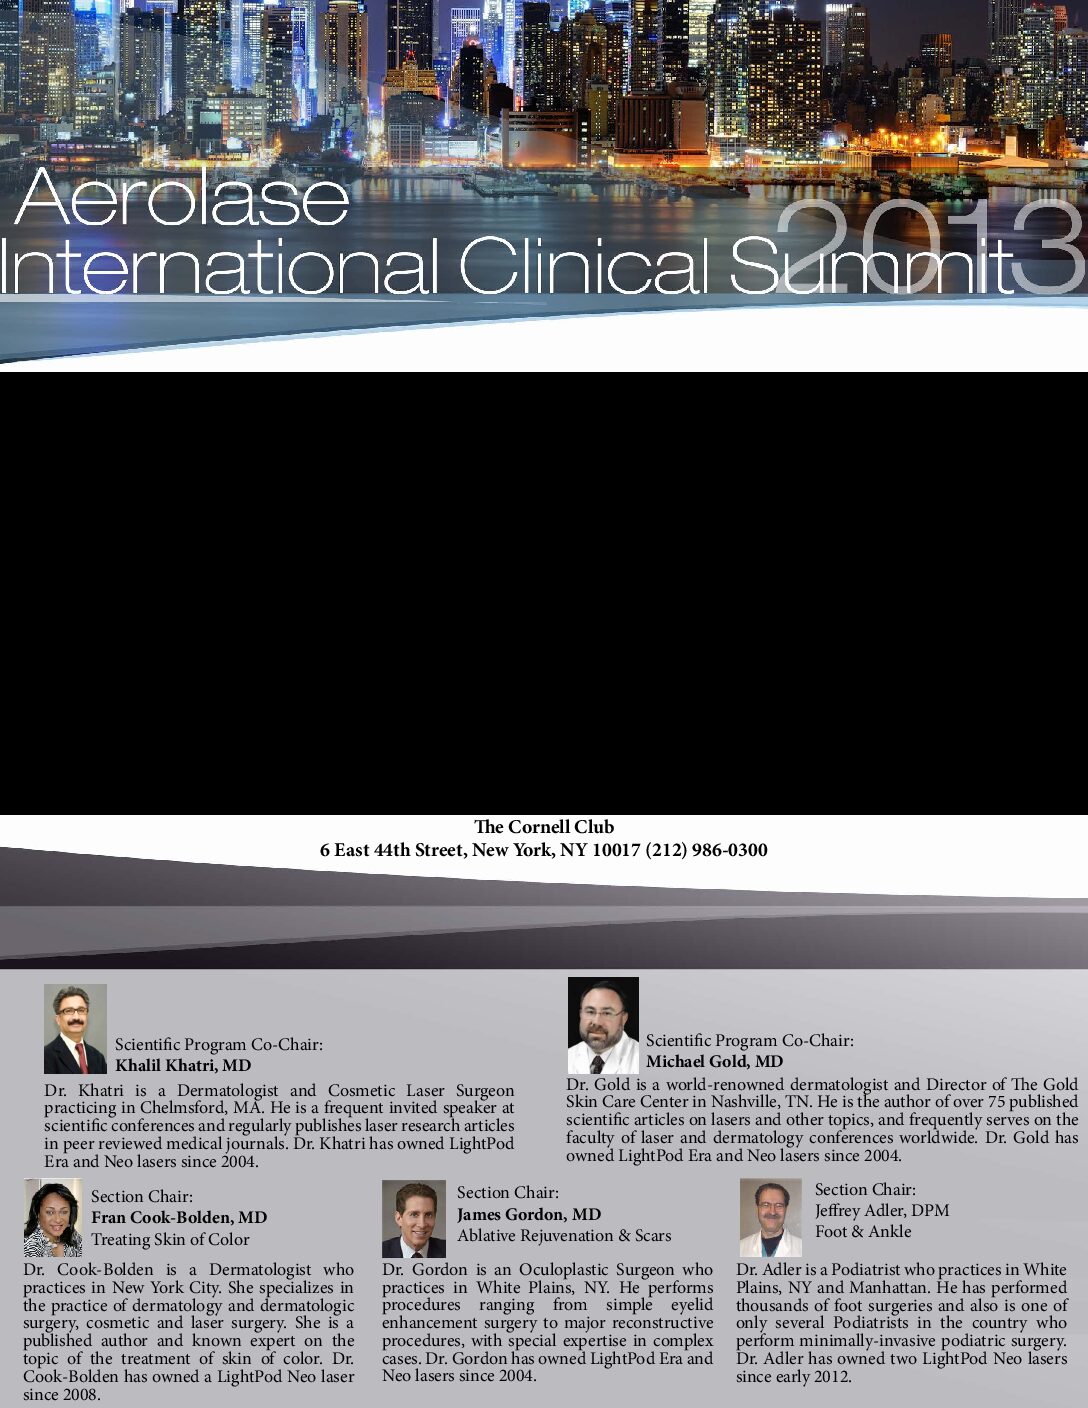 Aerolase international clinical summit of 2013